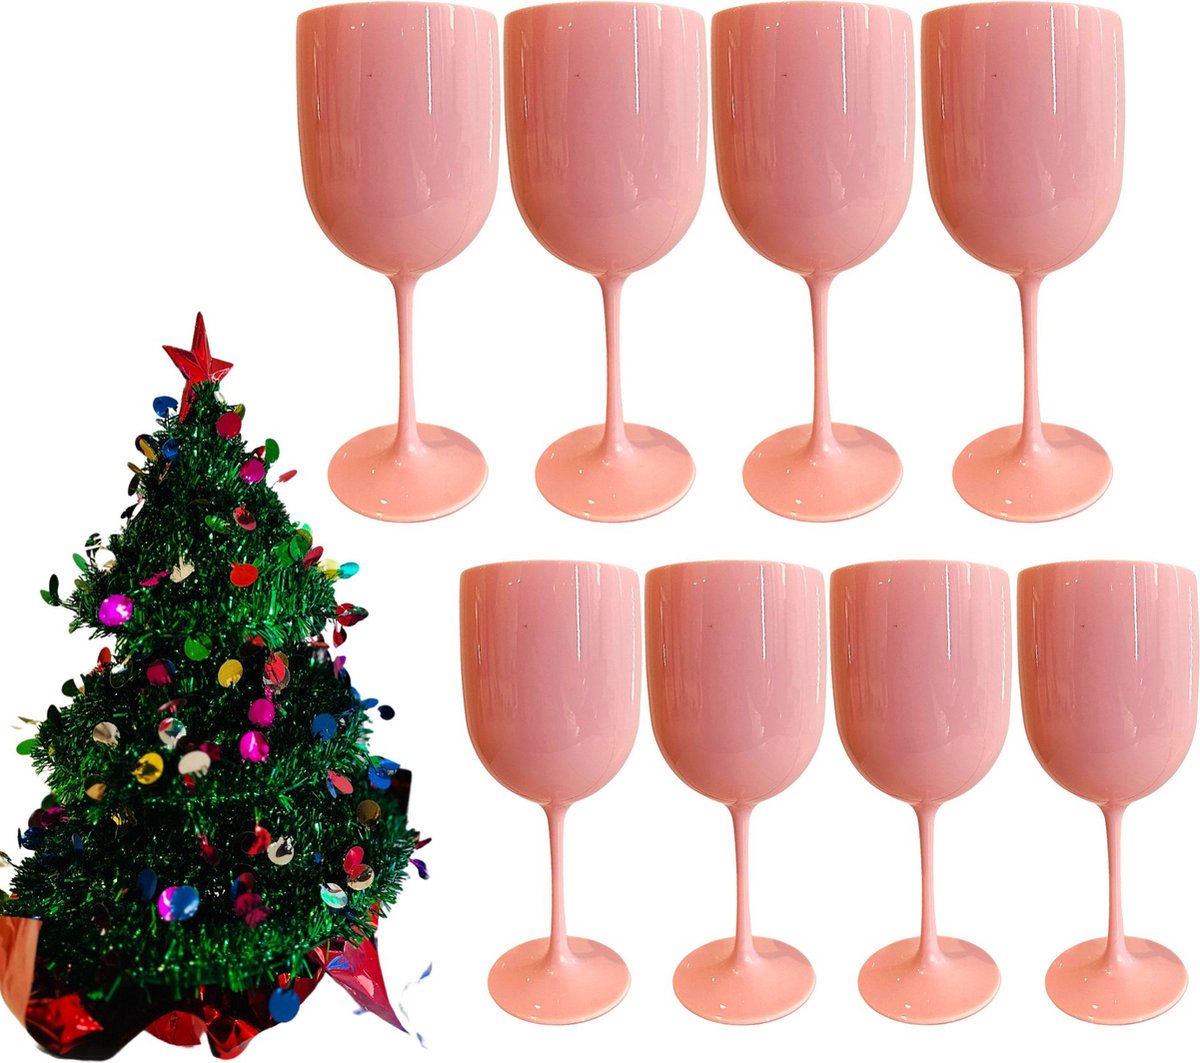 EazyPeezy Roze Onbreekbare Champagne Glazen - Feestelijke Champagne Glazen - 8 stuks